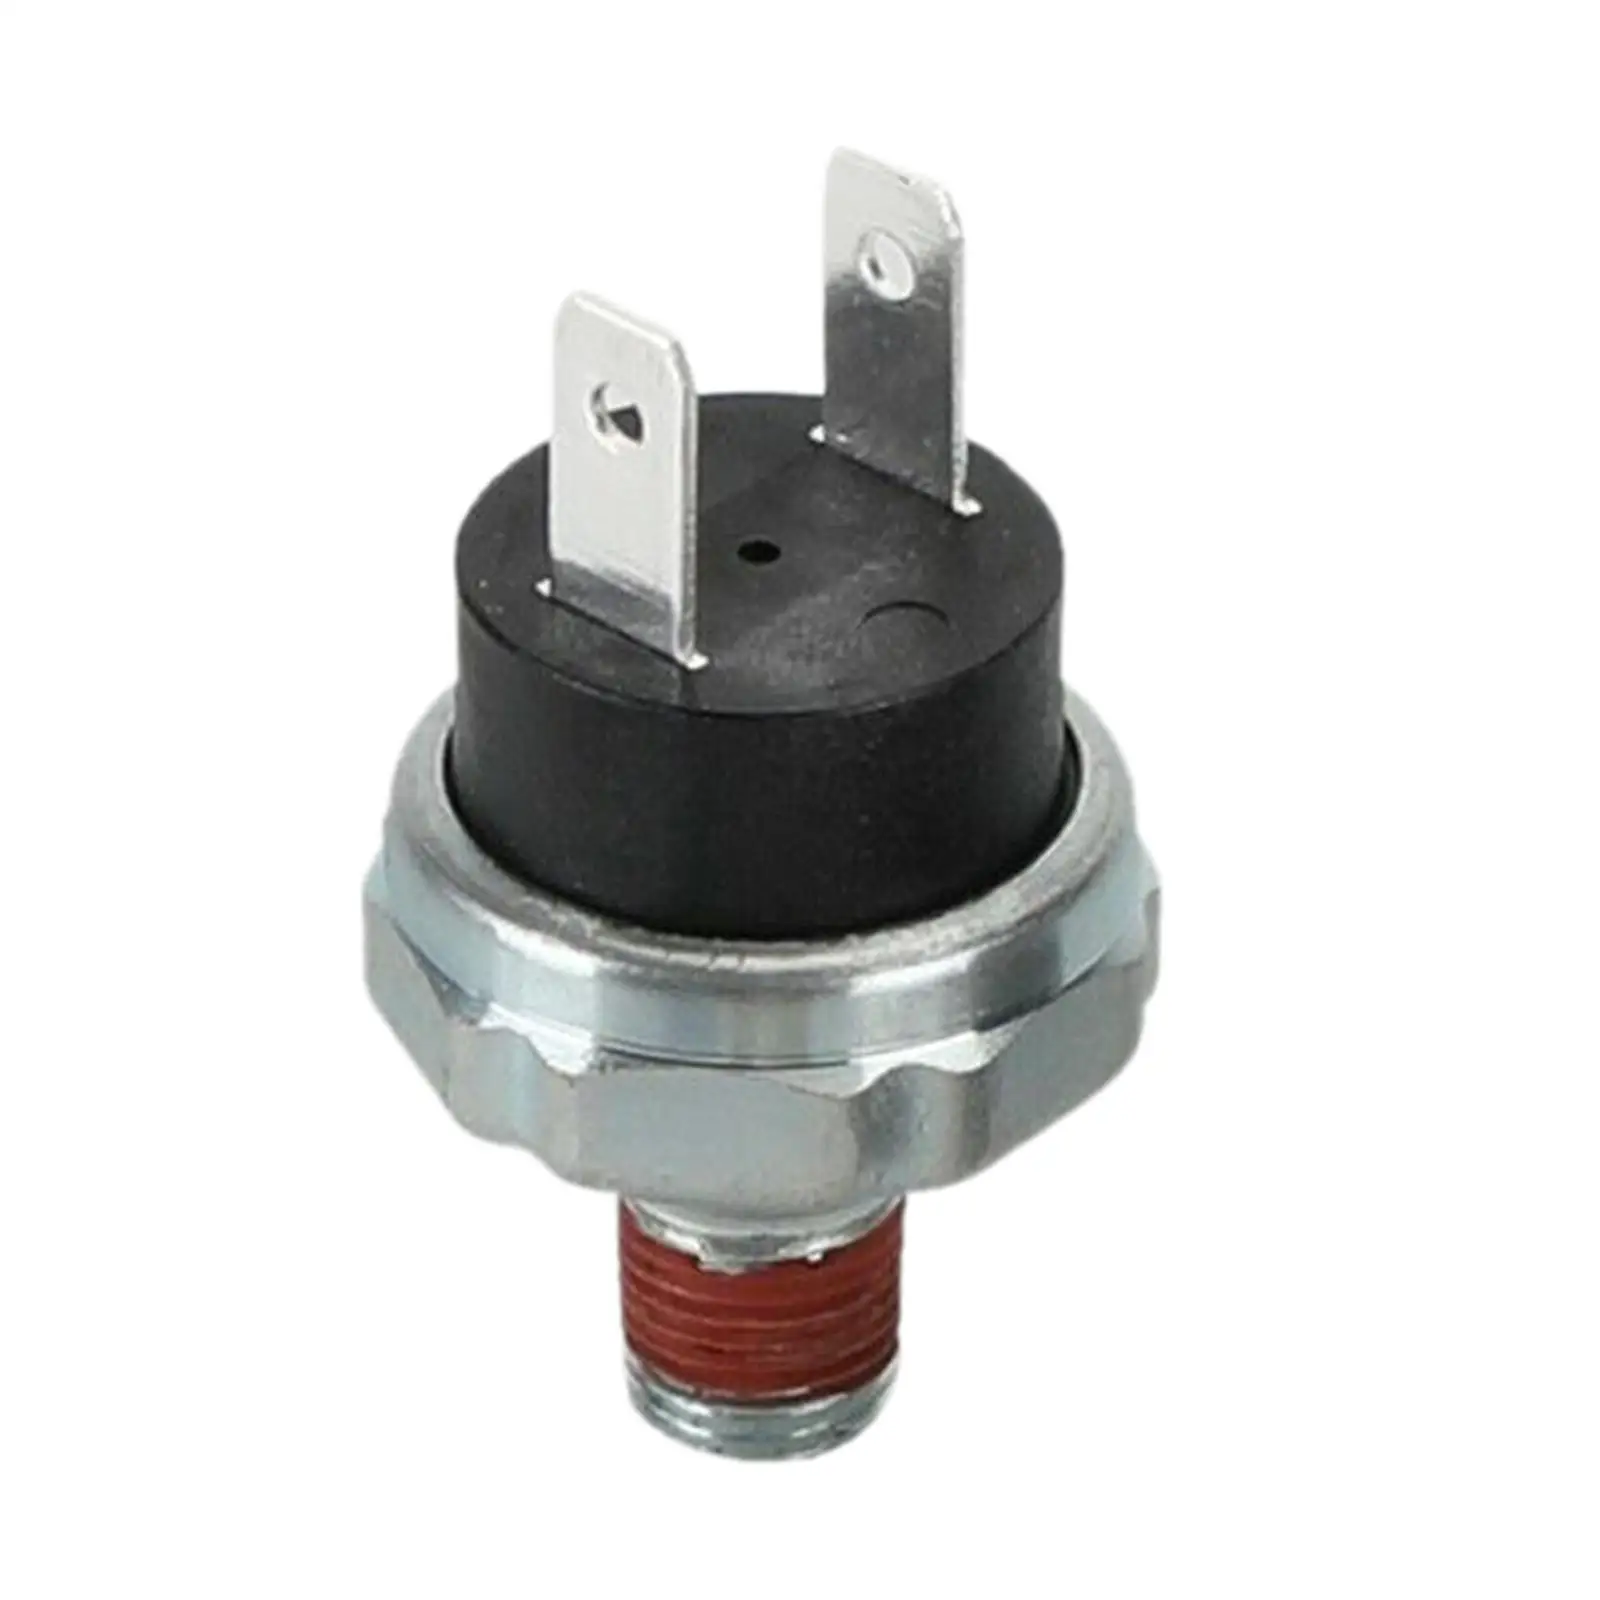 Transmission High Gear Lock Switch Kit S74416AK Wear Resistant Lockup Switch Kit for TH 700-R4 4L60 200-4R 74416A K013